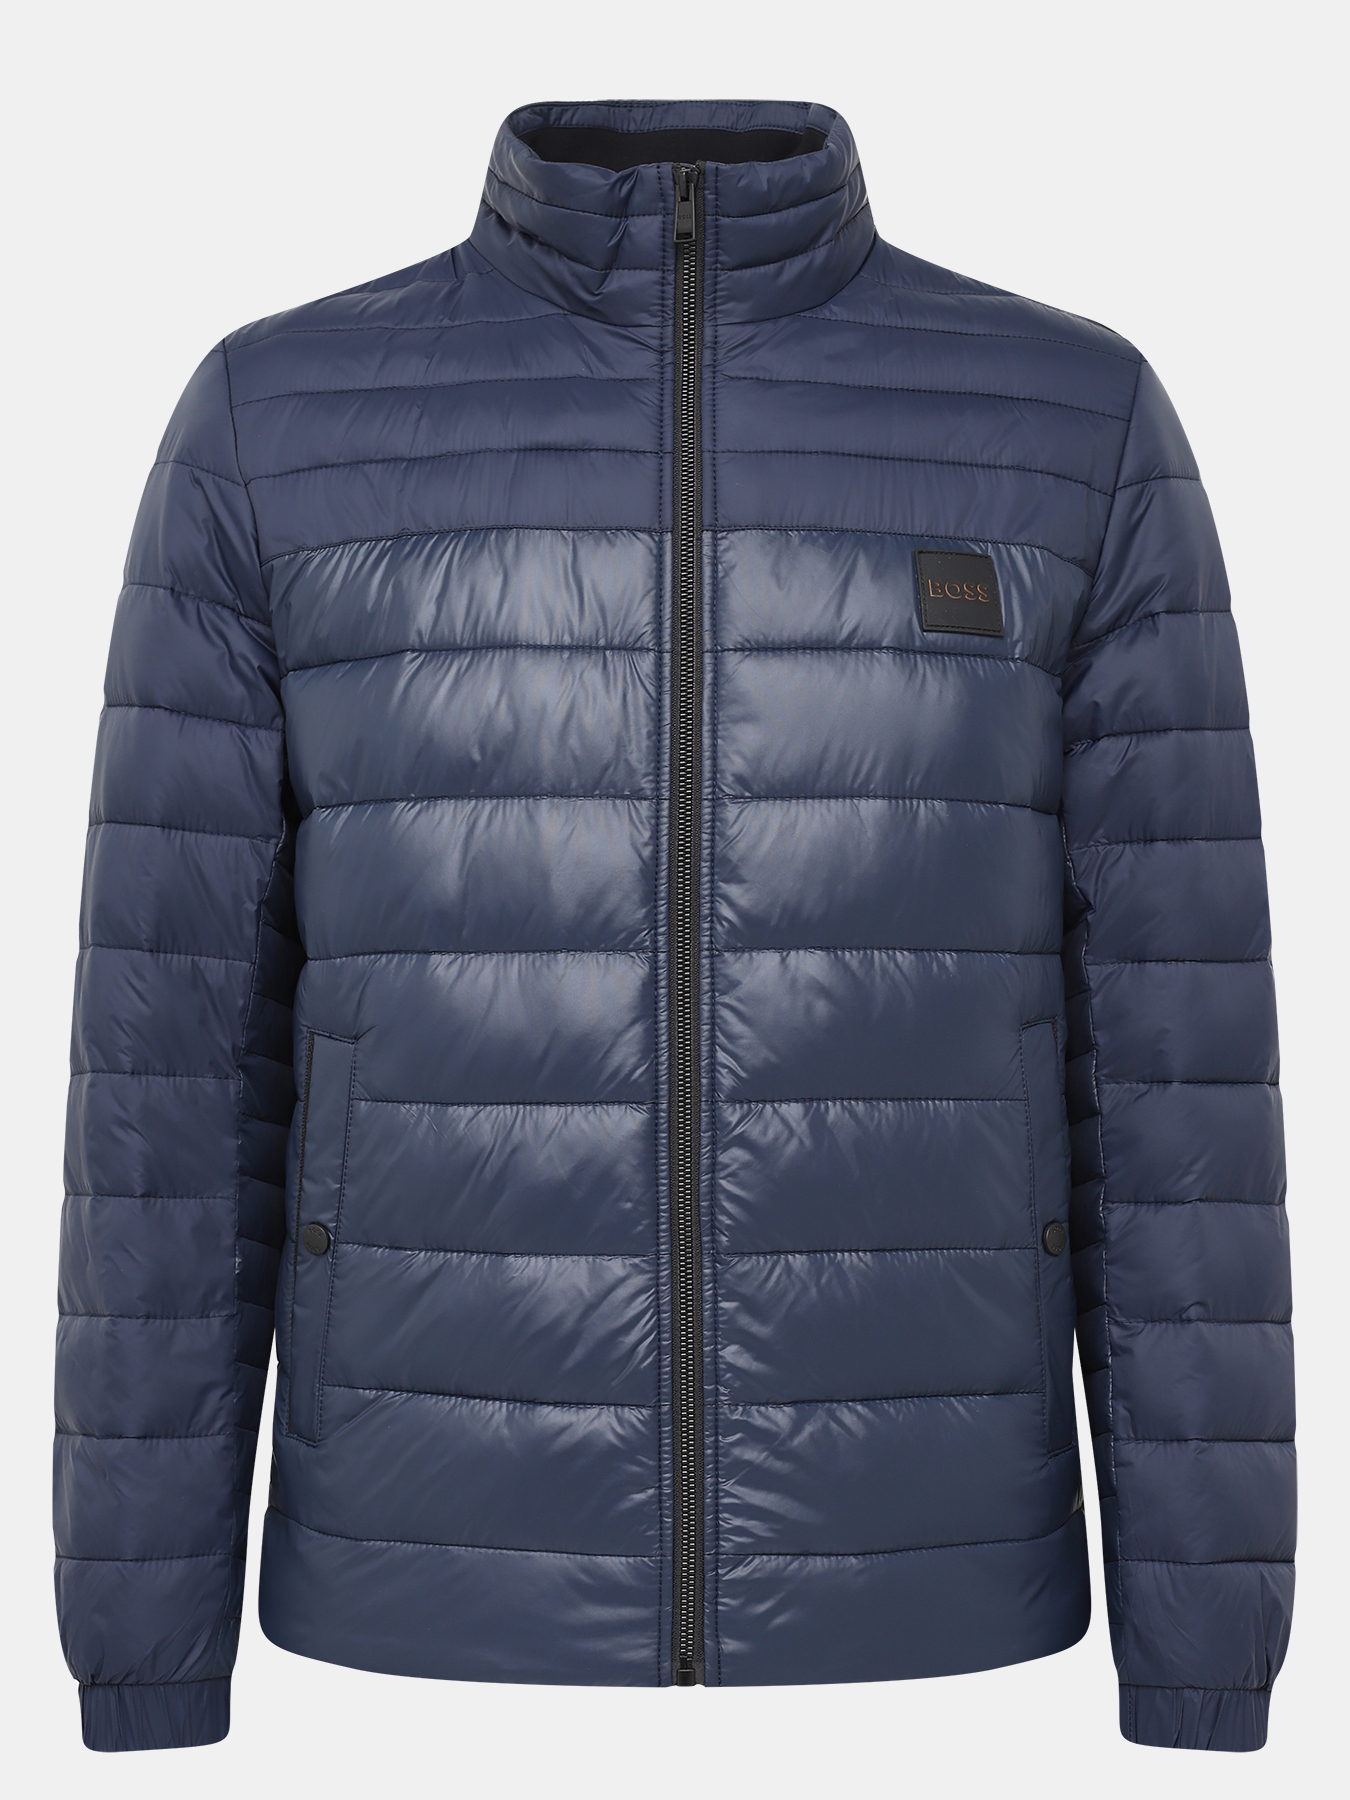 Куртка Oden BOSS 420447-028, цвет синий, размер 54 - фото 1